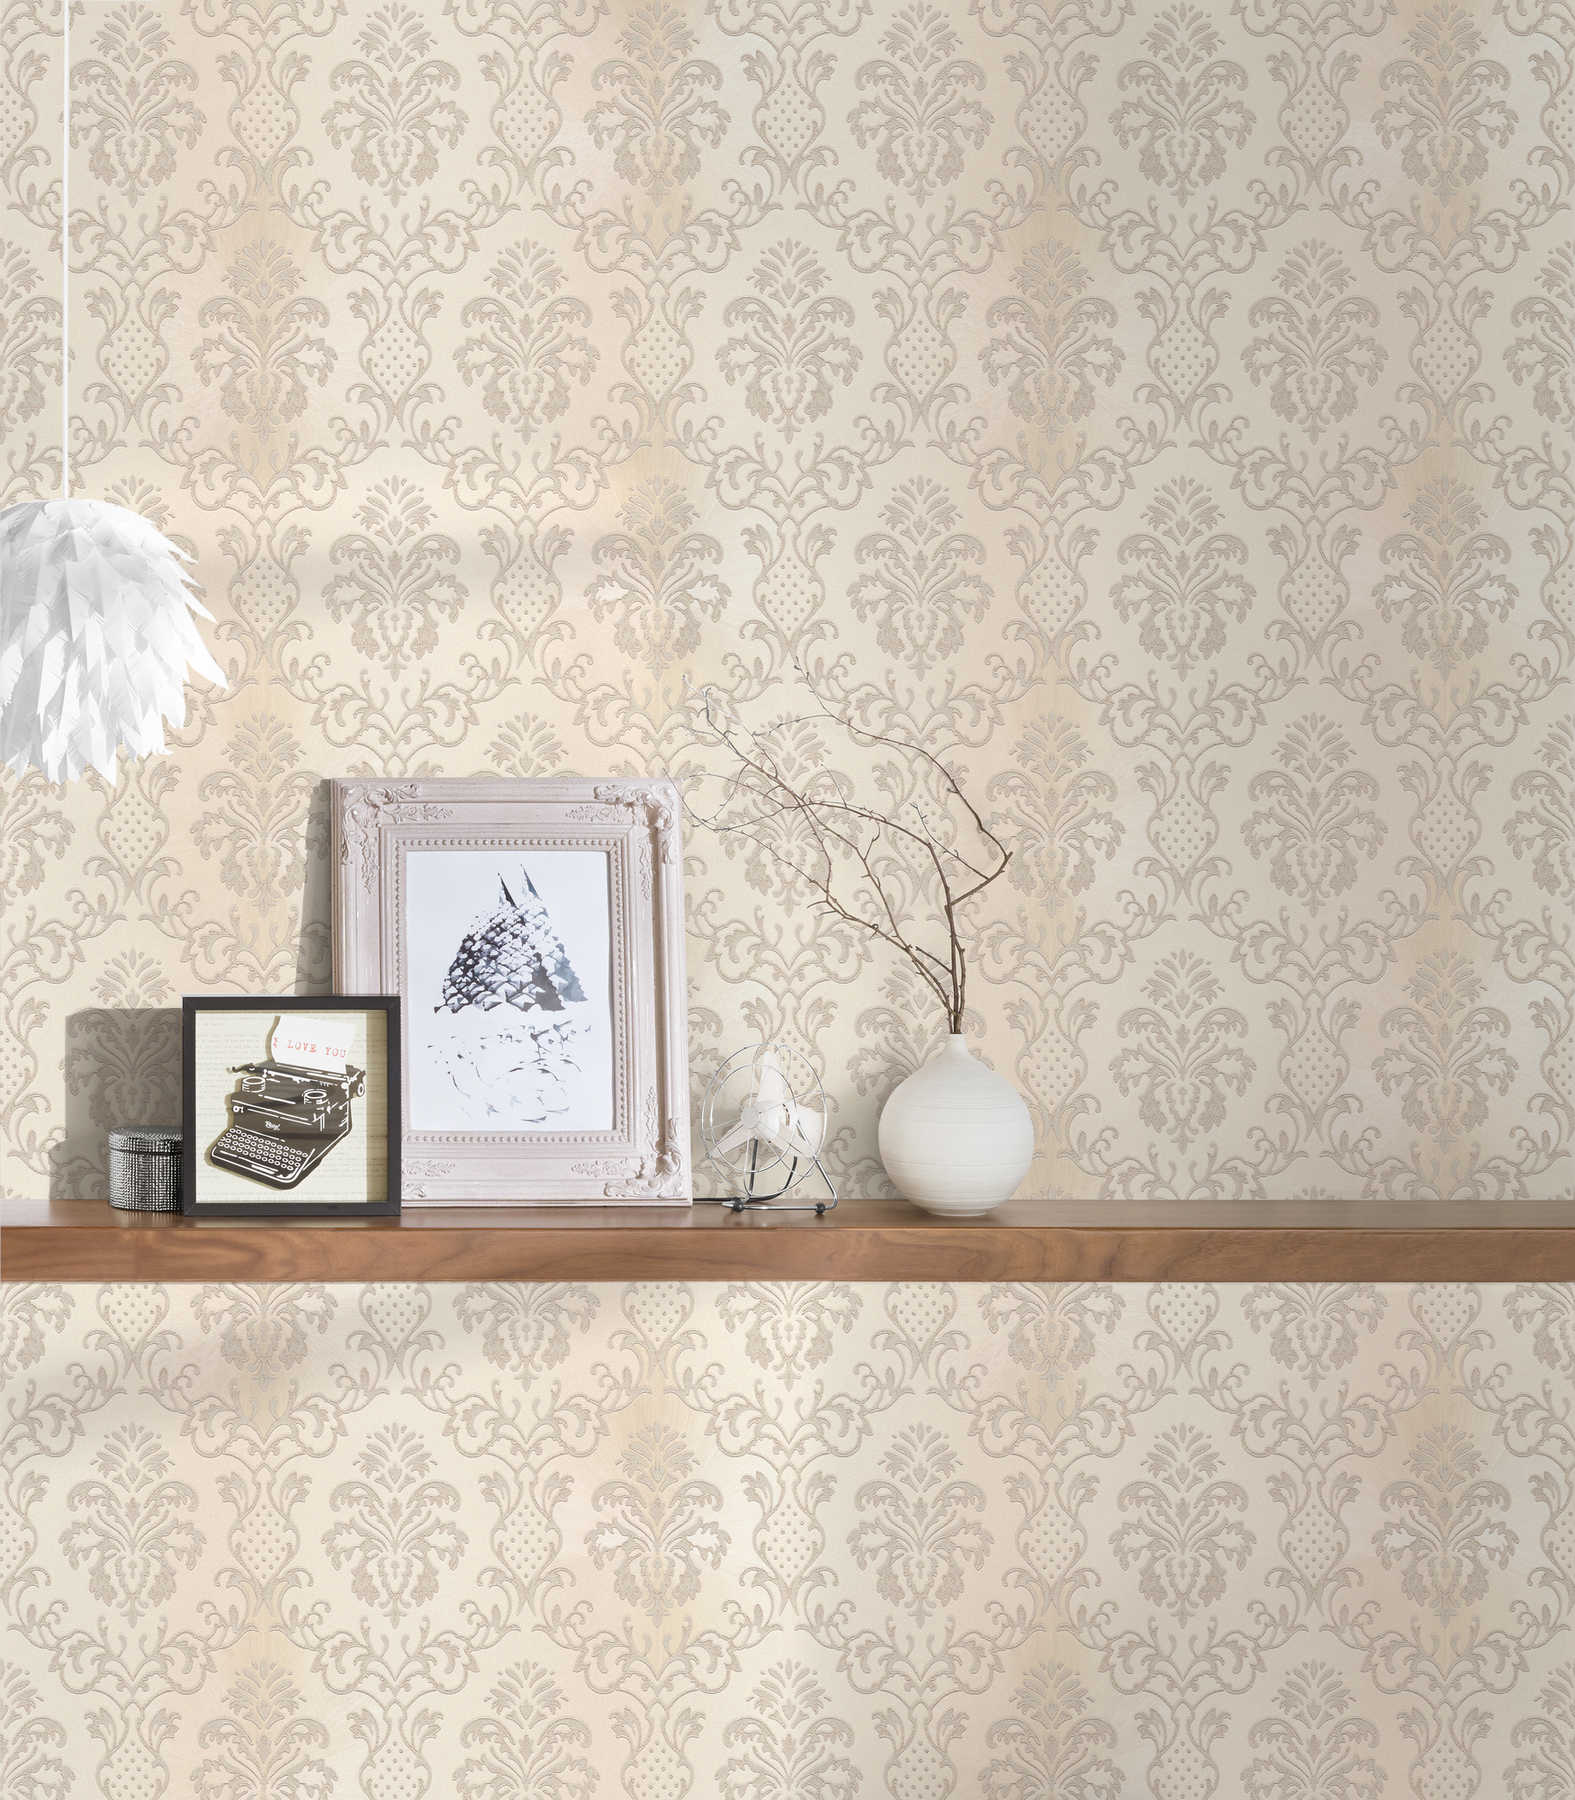             Ornament Tapete Colonial Style – Creme, Grau
        